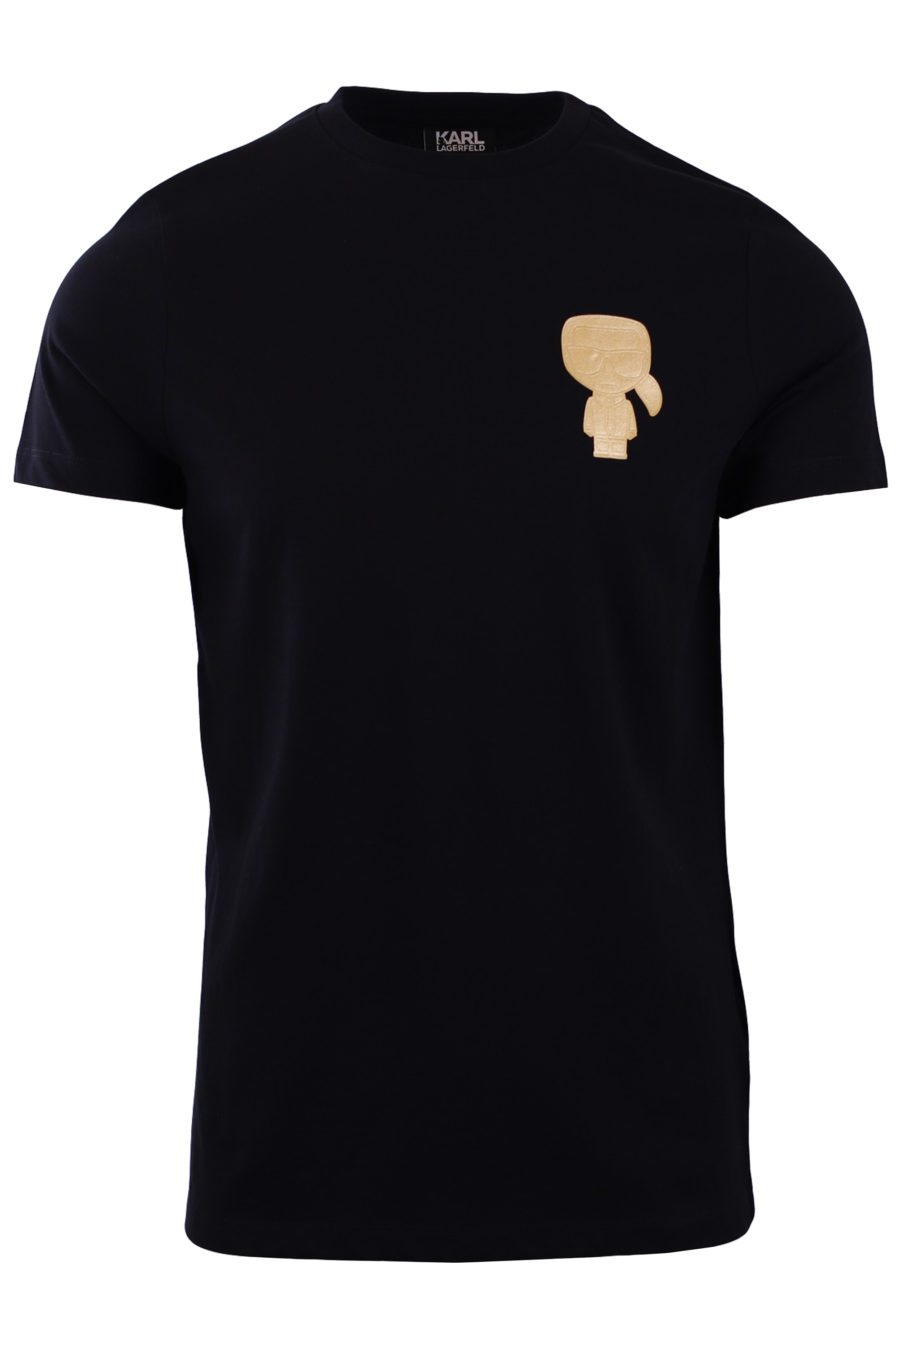 Camiseta negra con el perfil de Karl dorado - e226381c07e0bcb9f21f95d7b1a4c6b2c1016d40